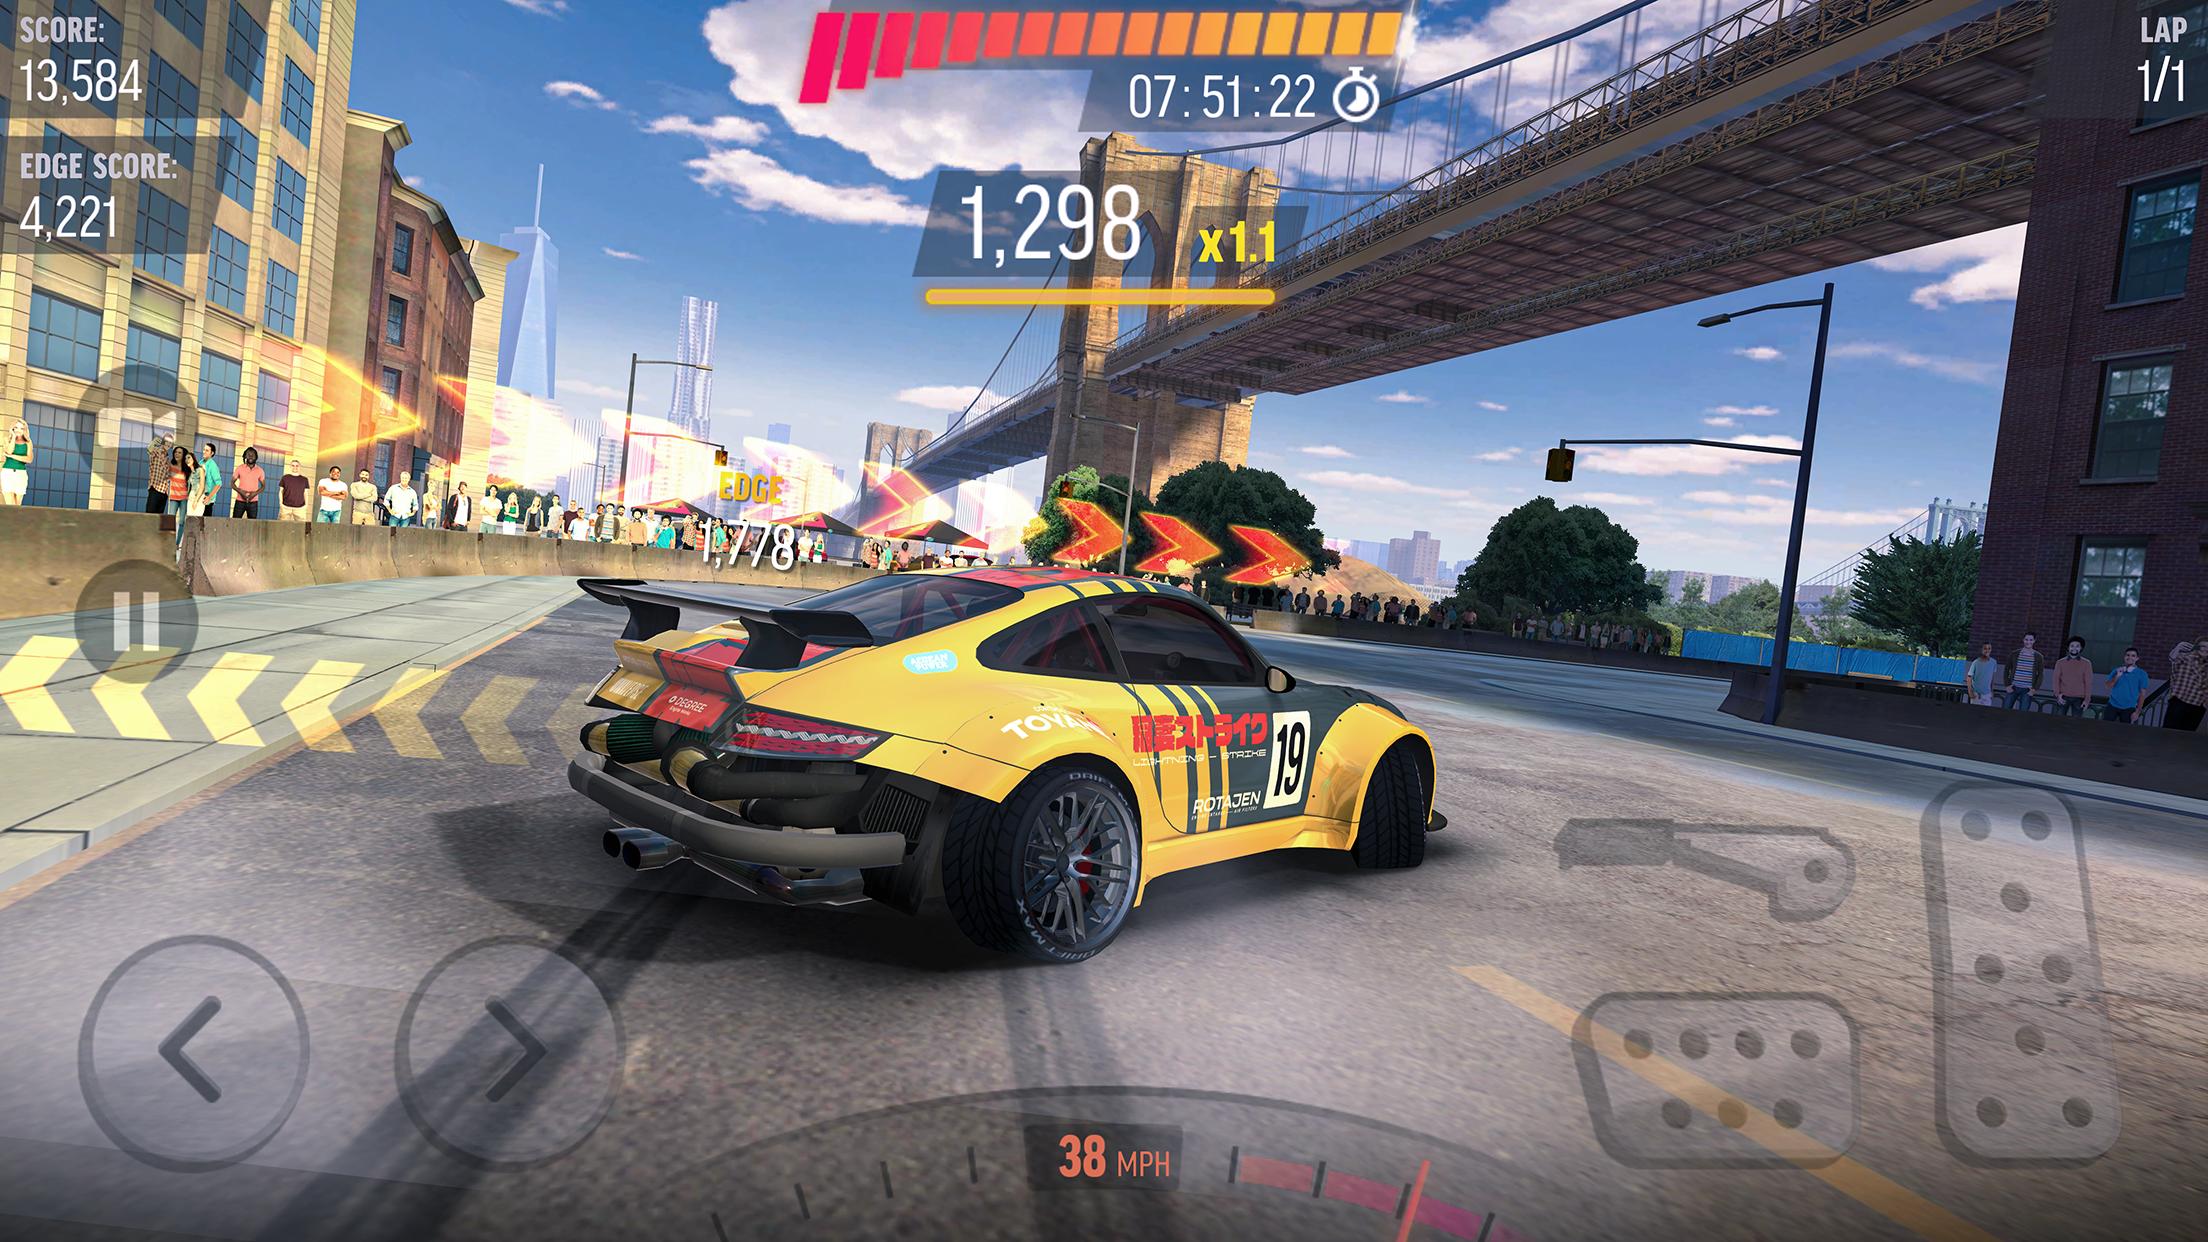 Drift Max Pro Car Drifting Game with Racing Cars 2.4.60 Screenshot 10